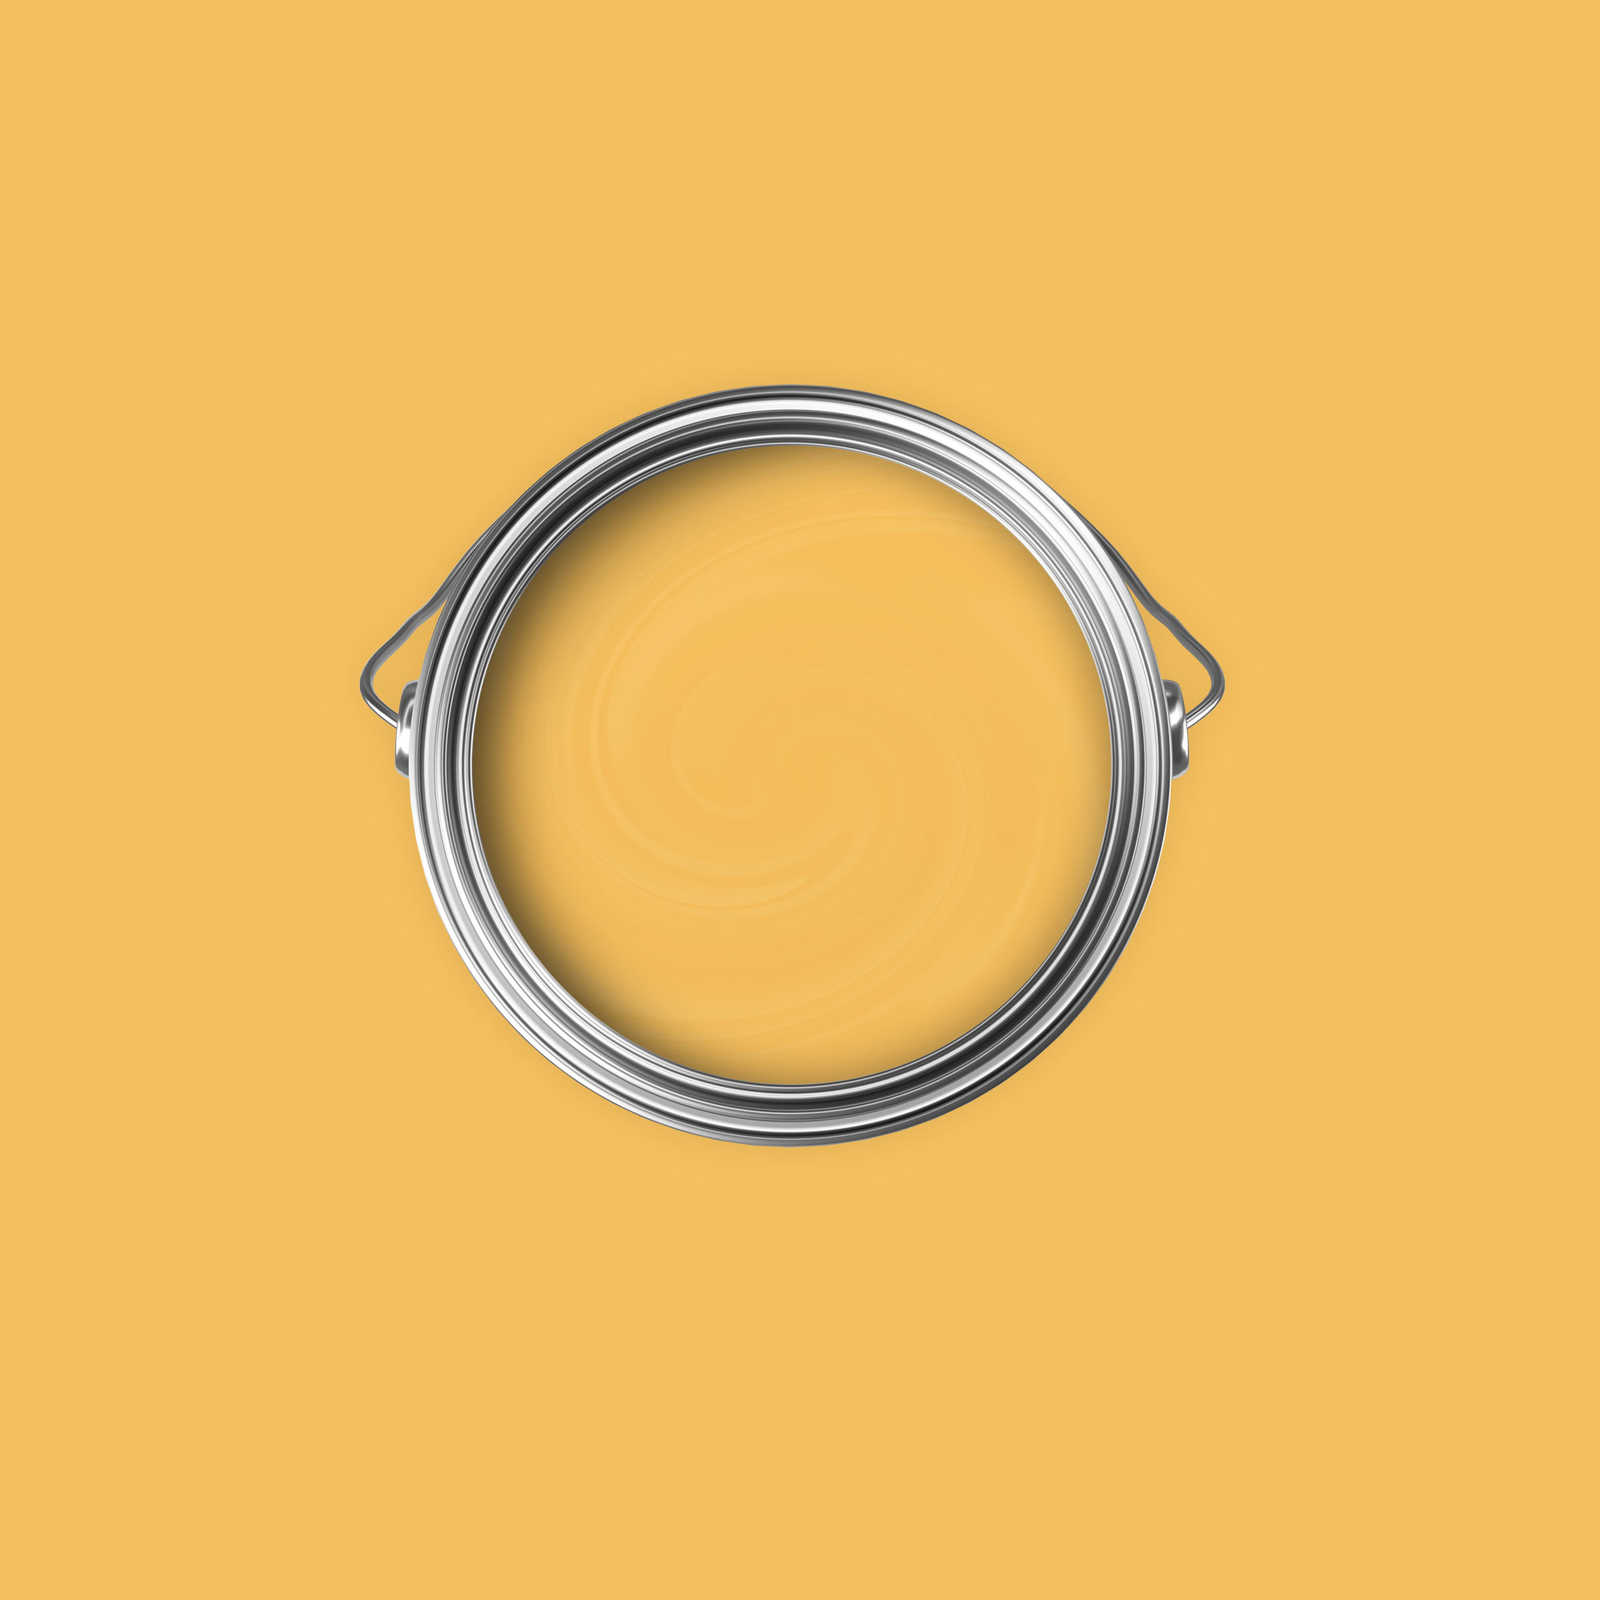             Premium Muurverf Stimulerend Zonnegeel »Juicy Yellow« NW805 – 2,5 liter
        